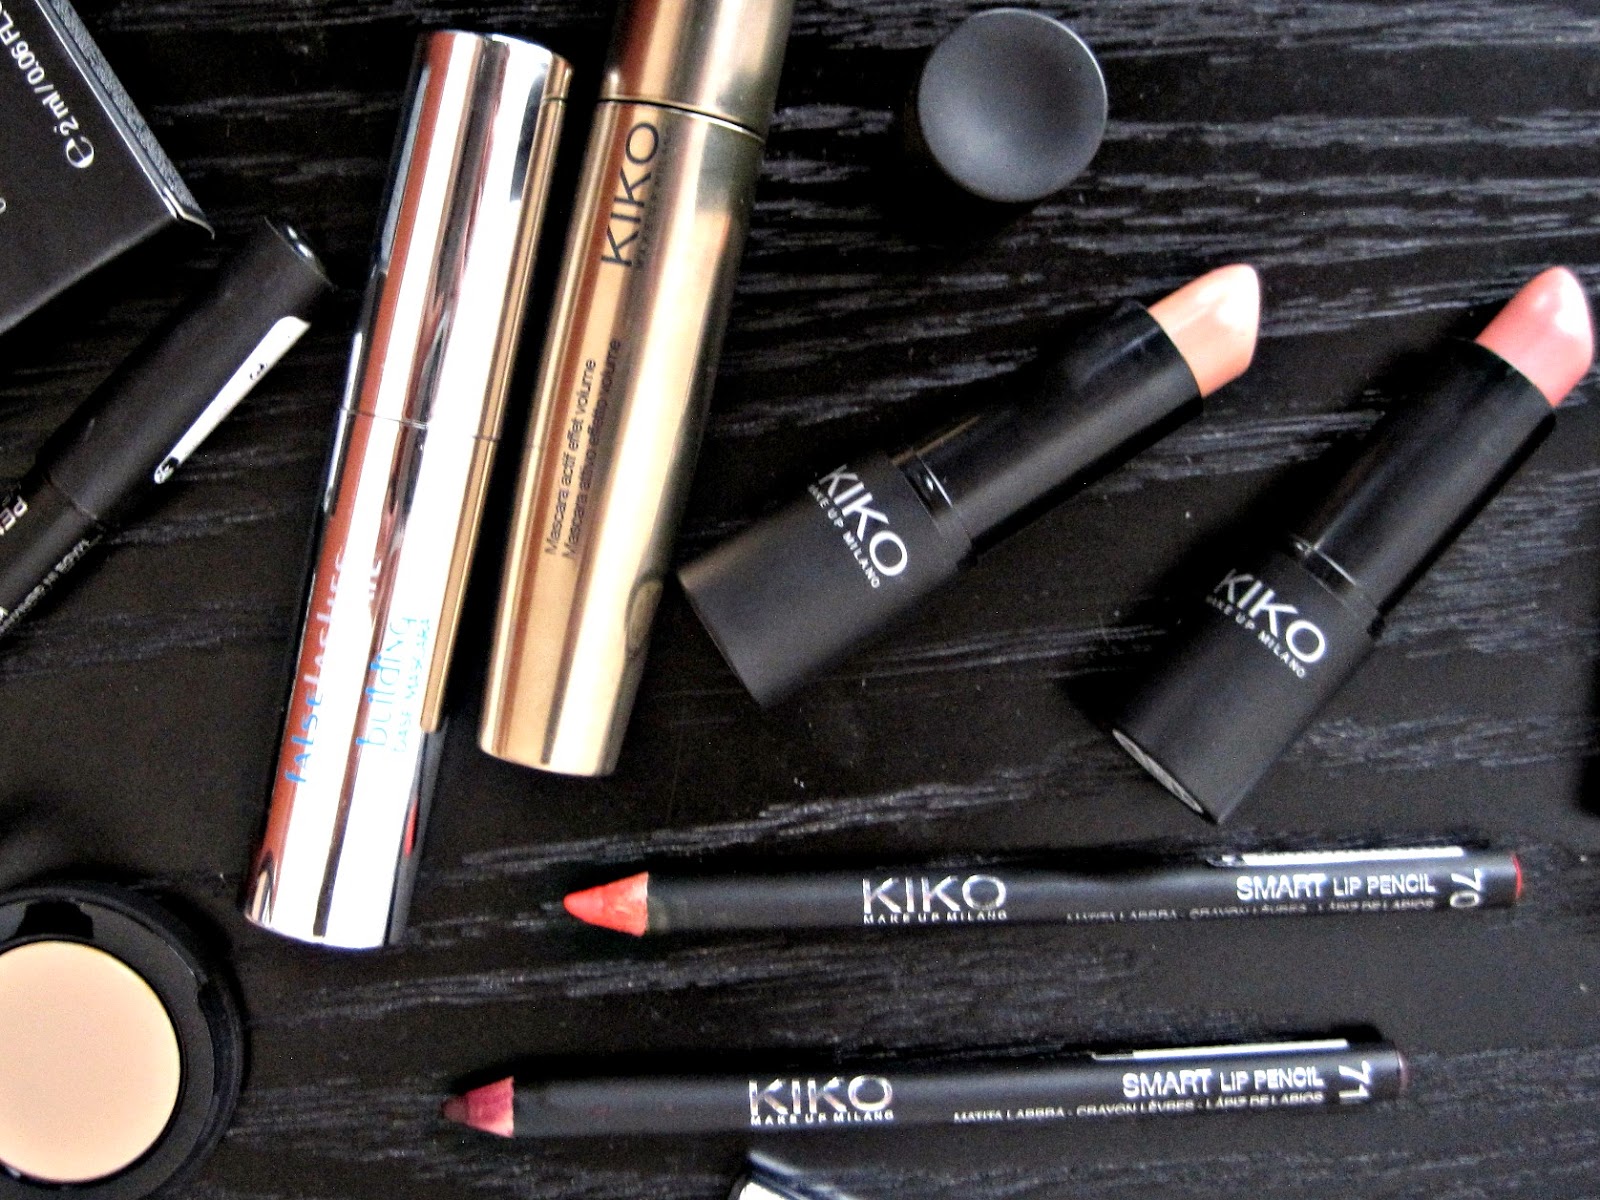 kiko smart lip pencil swatch lipstick 900 902 swatch mascara volumeyes full coverage concealer kiko